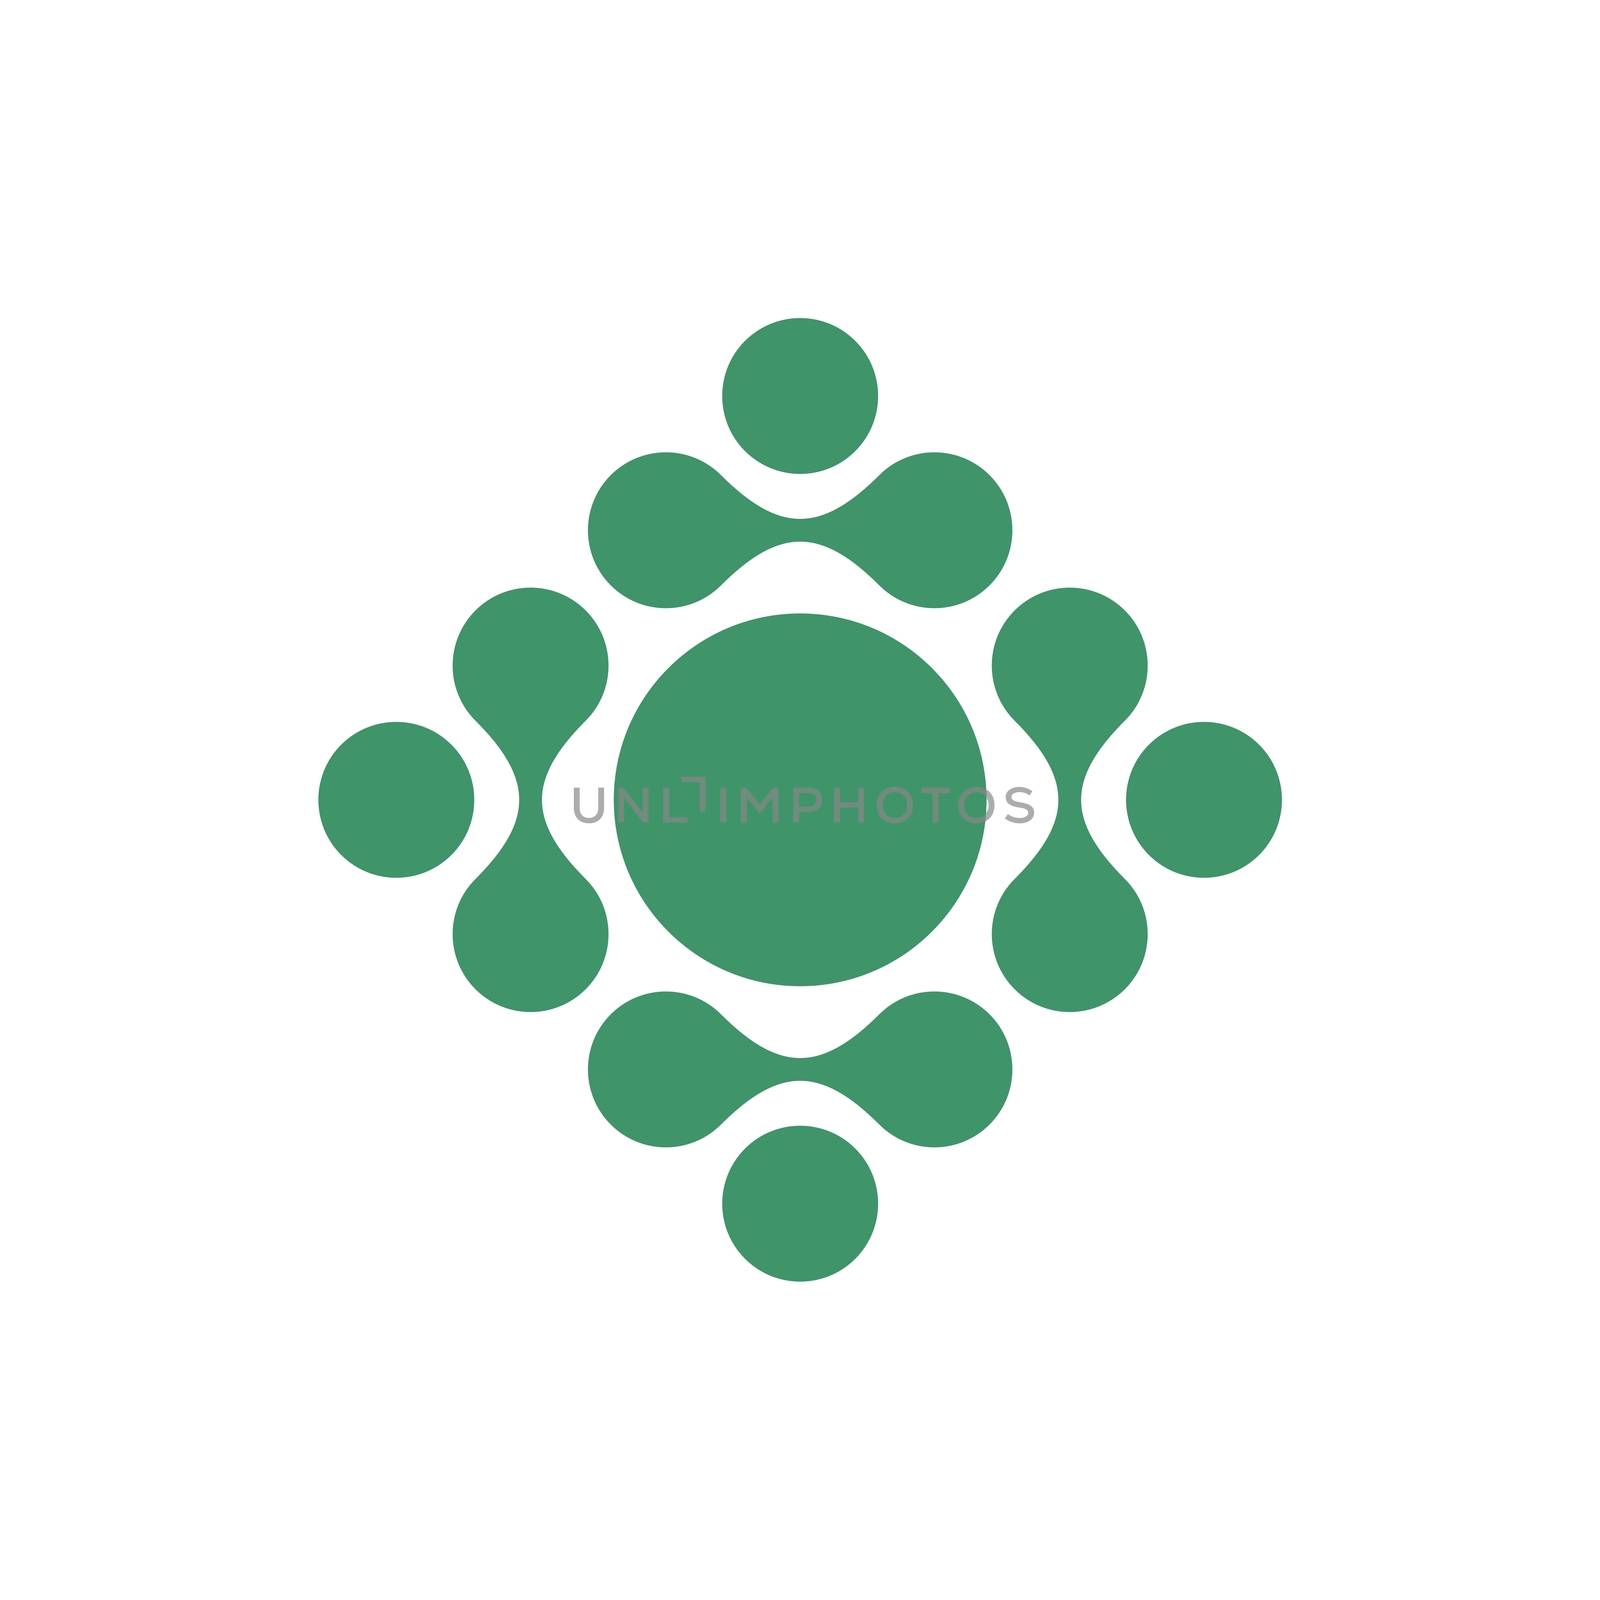 Molecule Quantum Dots Logo Template Illustration Design. Vector EPS 10.